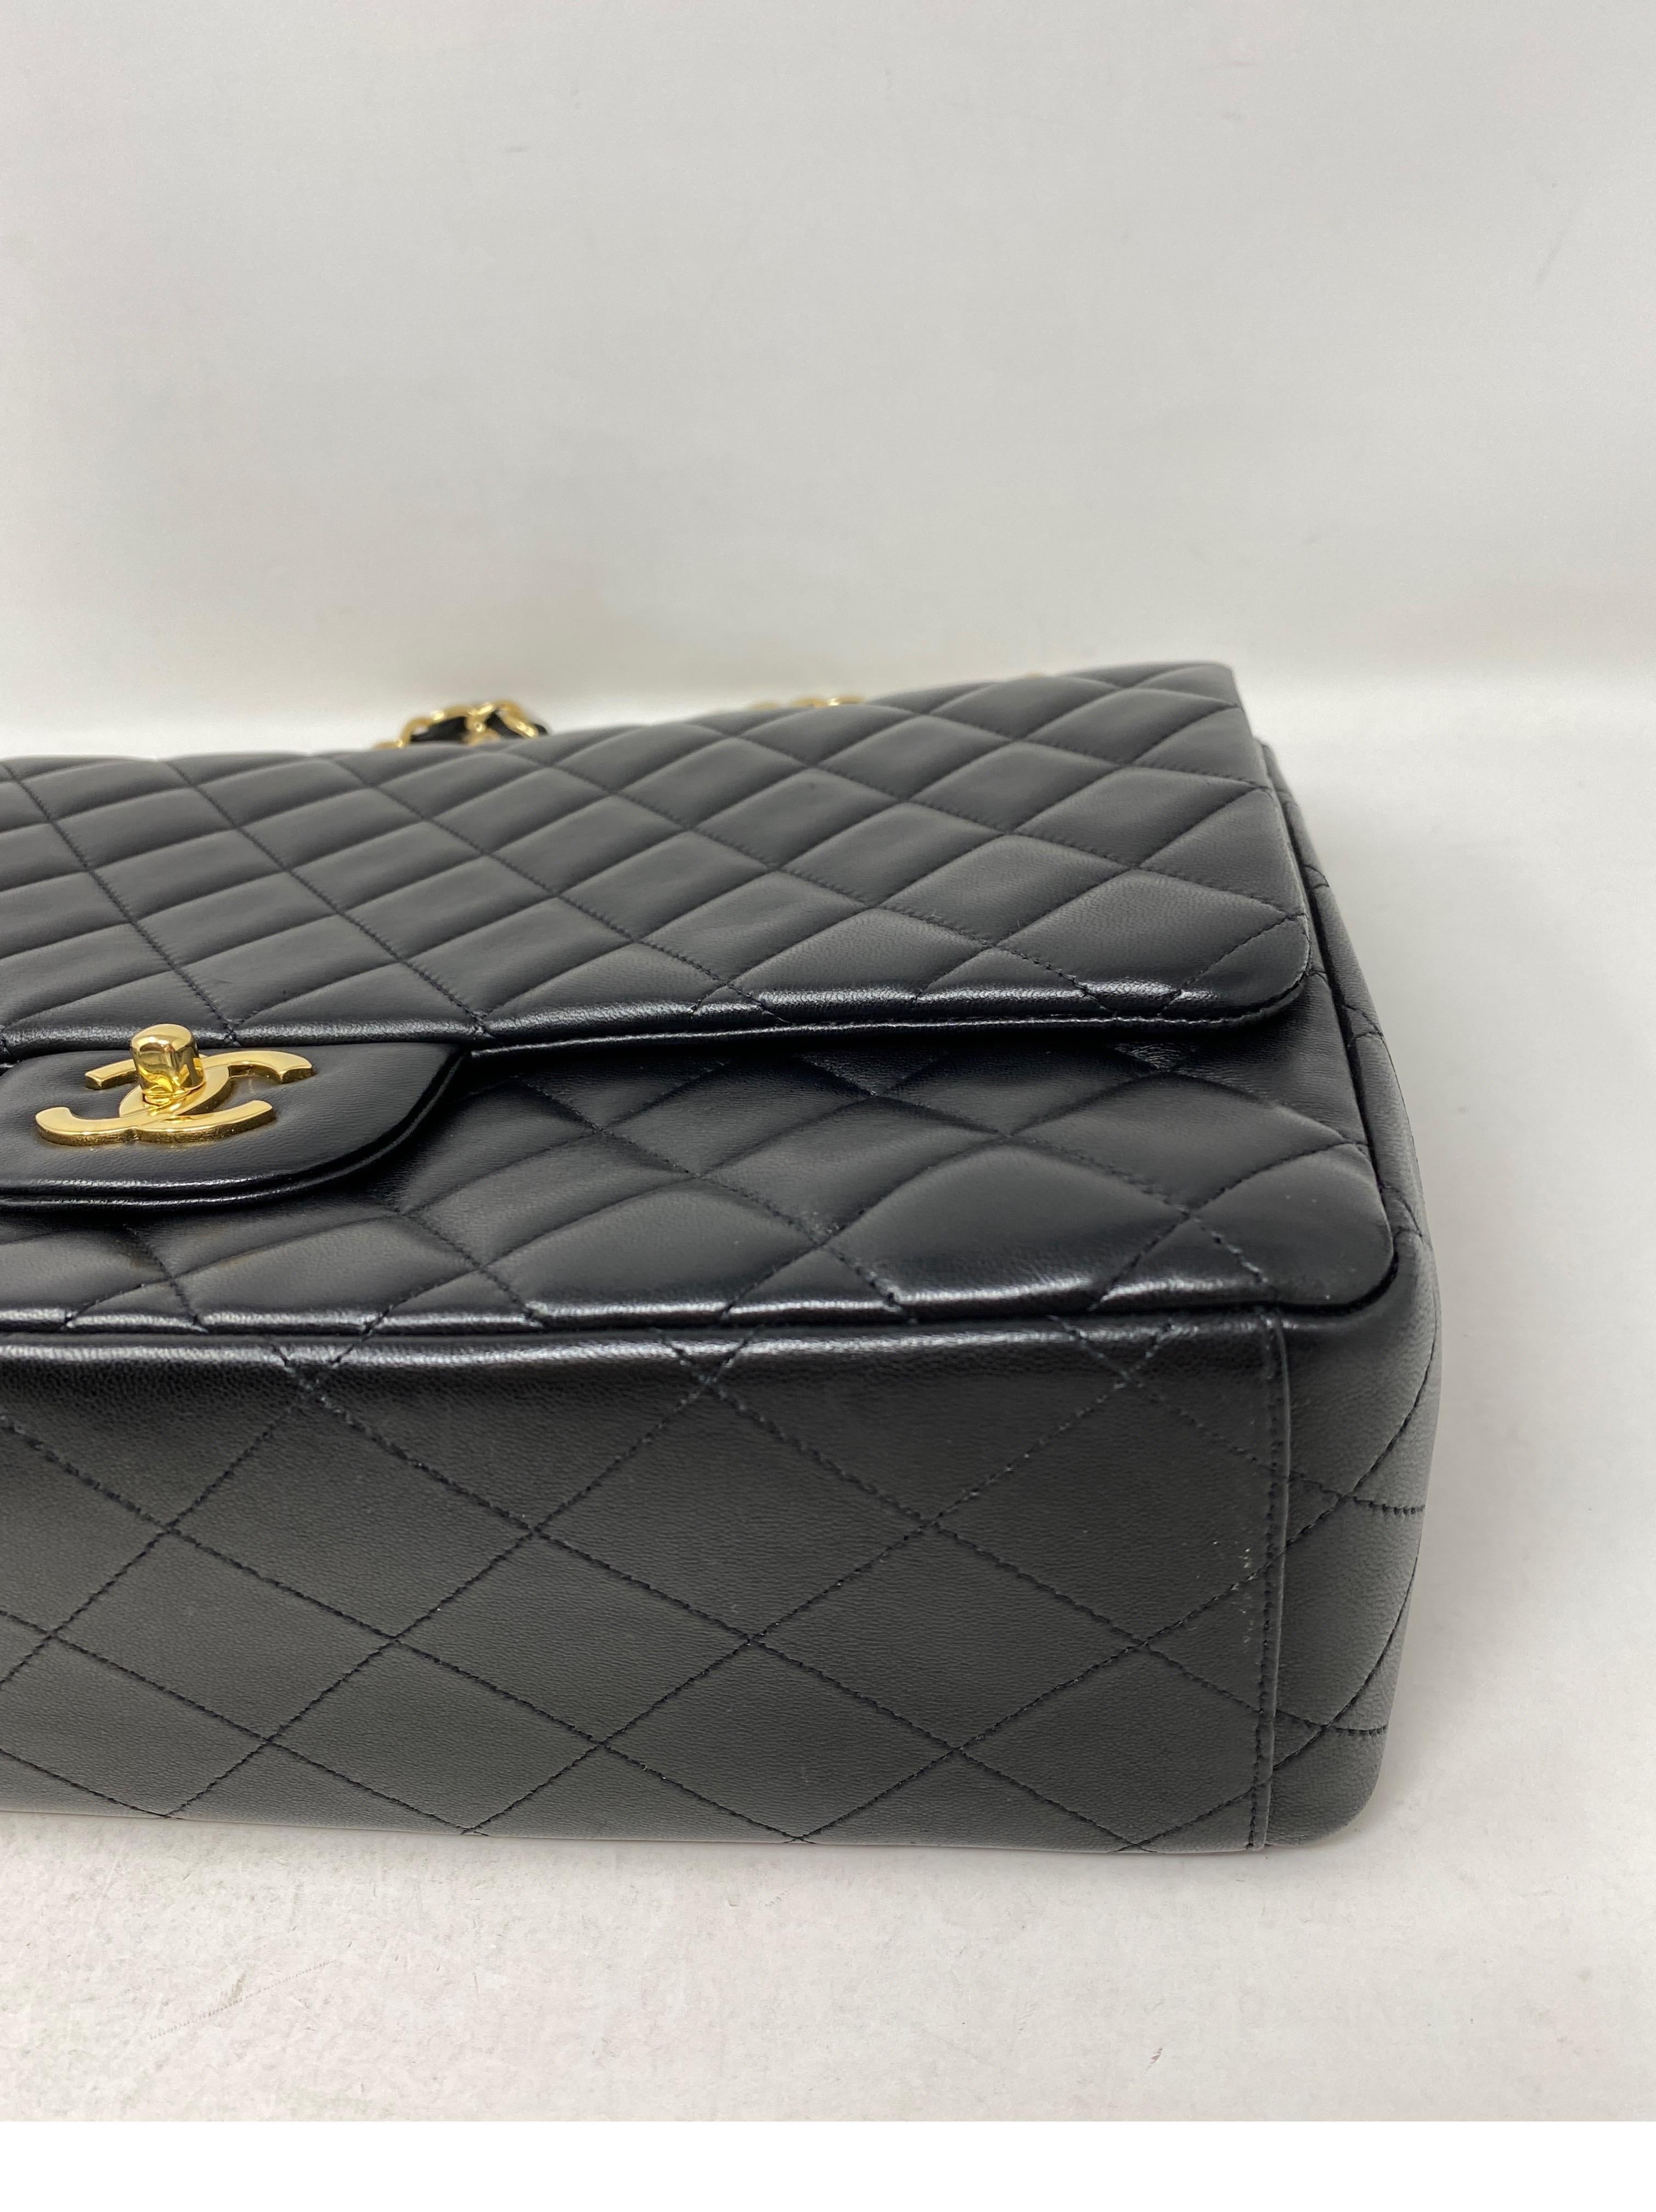 Chanel Black Lambskin Leather Maxi Bag  13